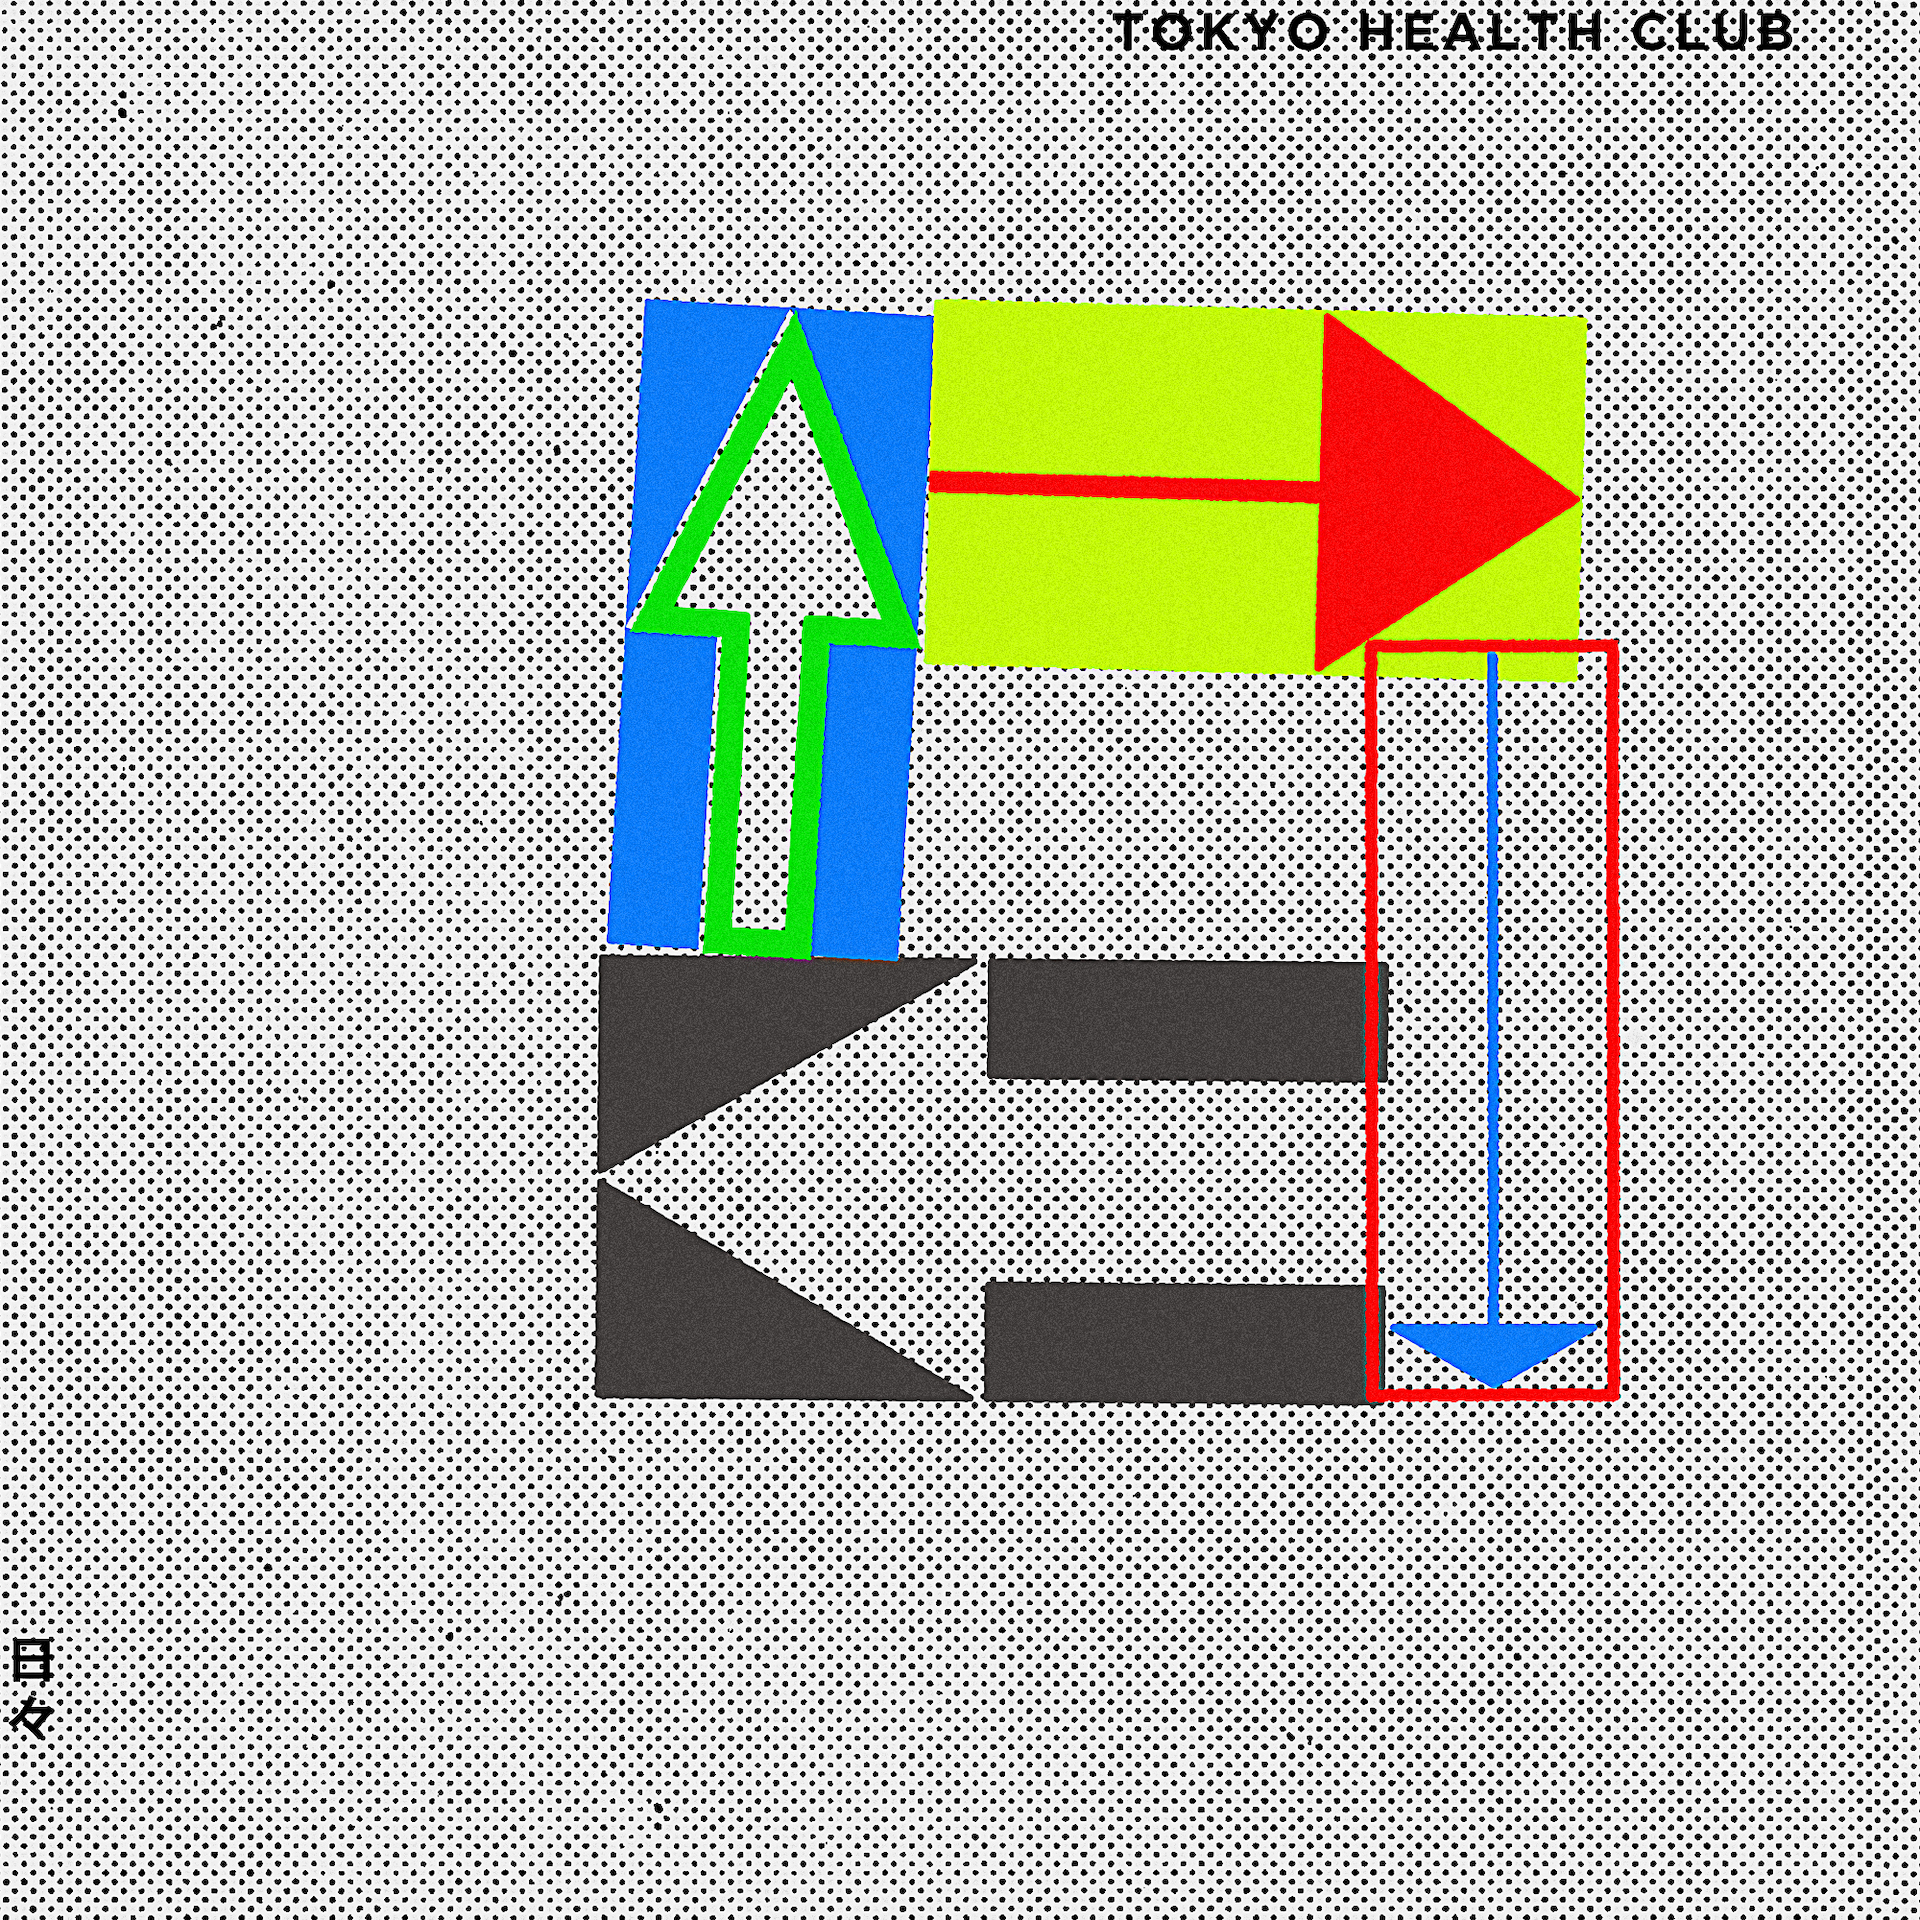 TOKYO HEALTH CLUBが約3年ぶりのシングル「日々」をリリース｜中目黒solfaの15周年パーティー、沖縄県那覇市CLUTCHのイベント出演も music230915-tokyohealthclub-2